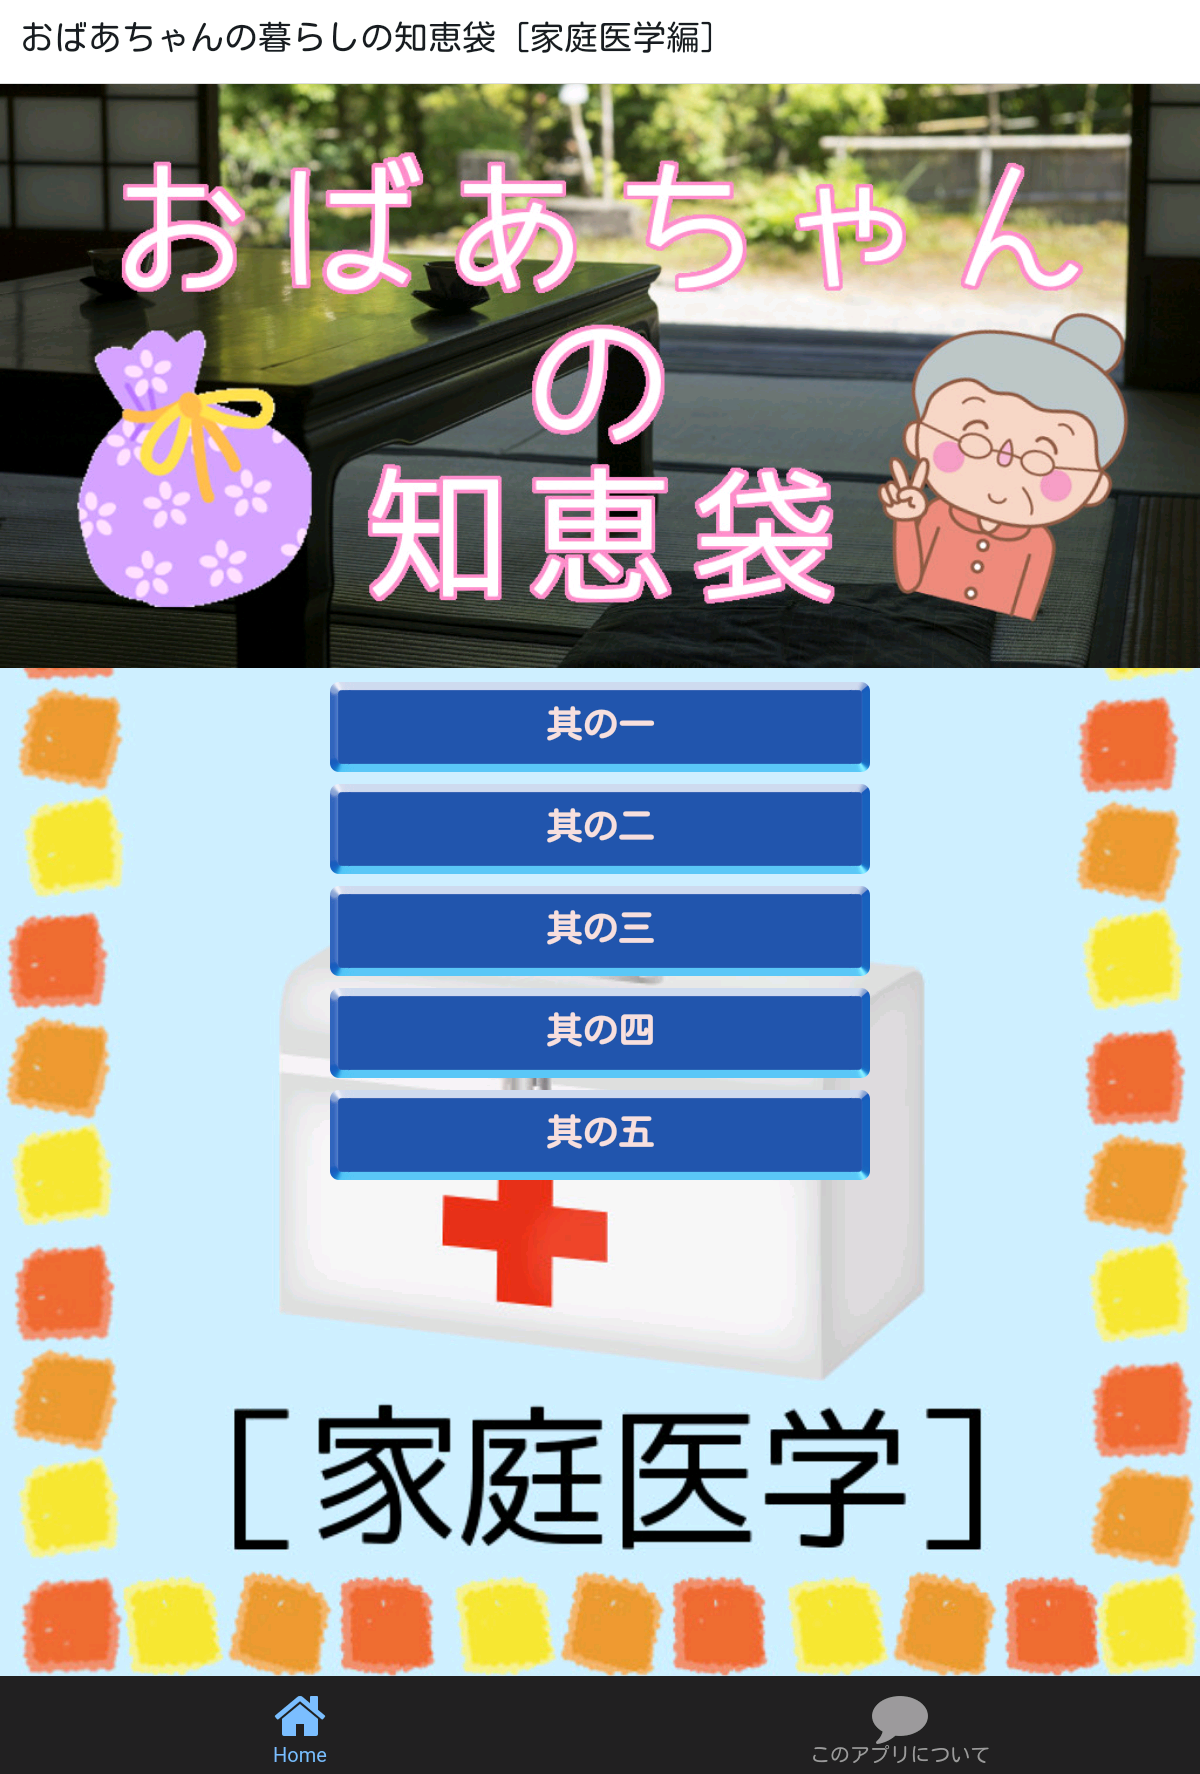 Android application おばあちゃんの暮らしの知恵袋［家庭医学編］ screenshort